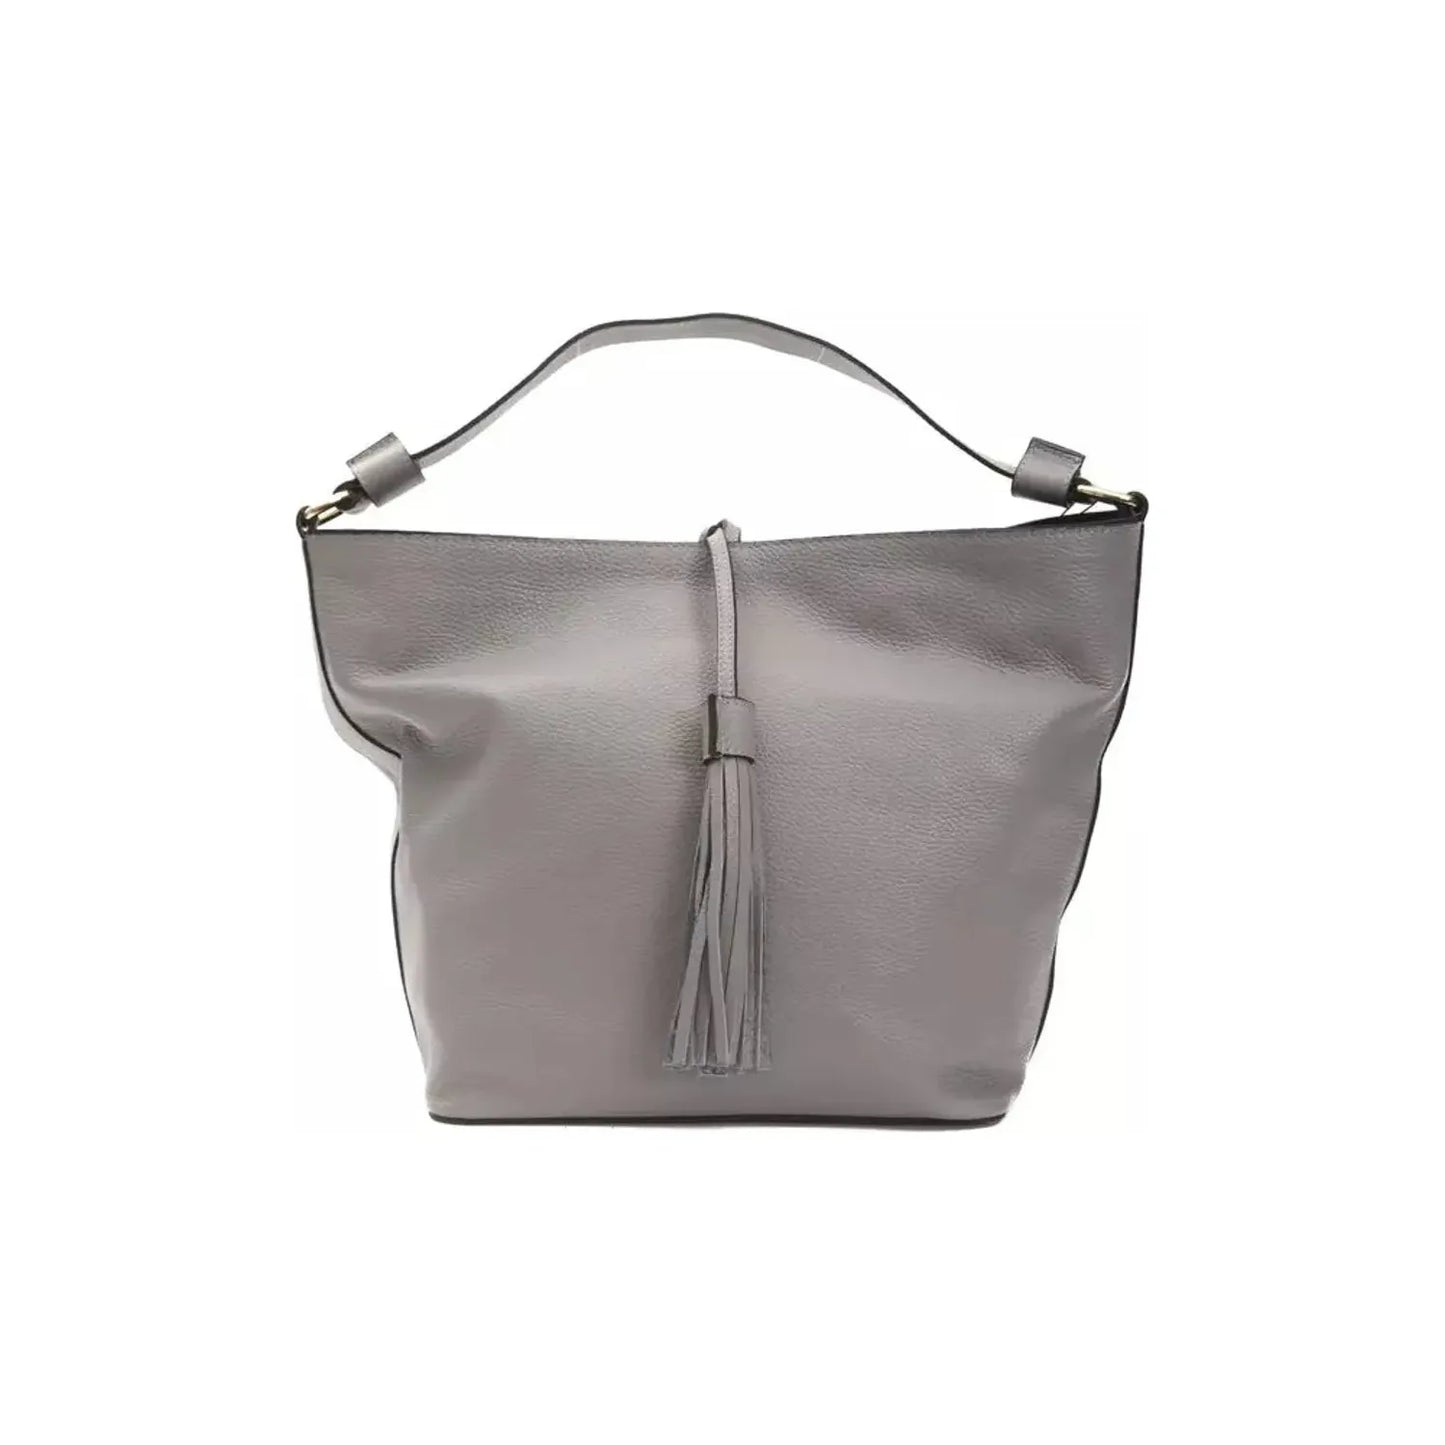 Pompei Donatella Chic Gray Leather Shoulder Bag - Adjustable Strap WOMAN SHOULDER BAGS gray-leather-shoulder-bag-1 stock_product_image_5805_2014242297-24-60a50a09-873.webp